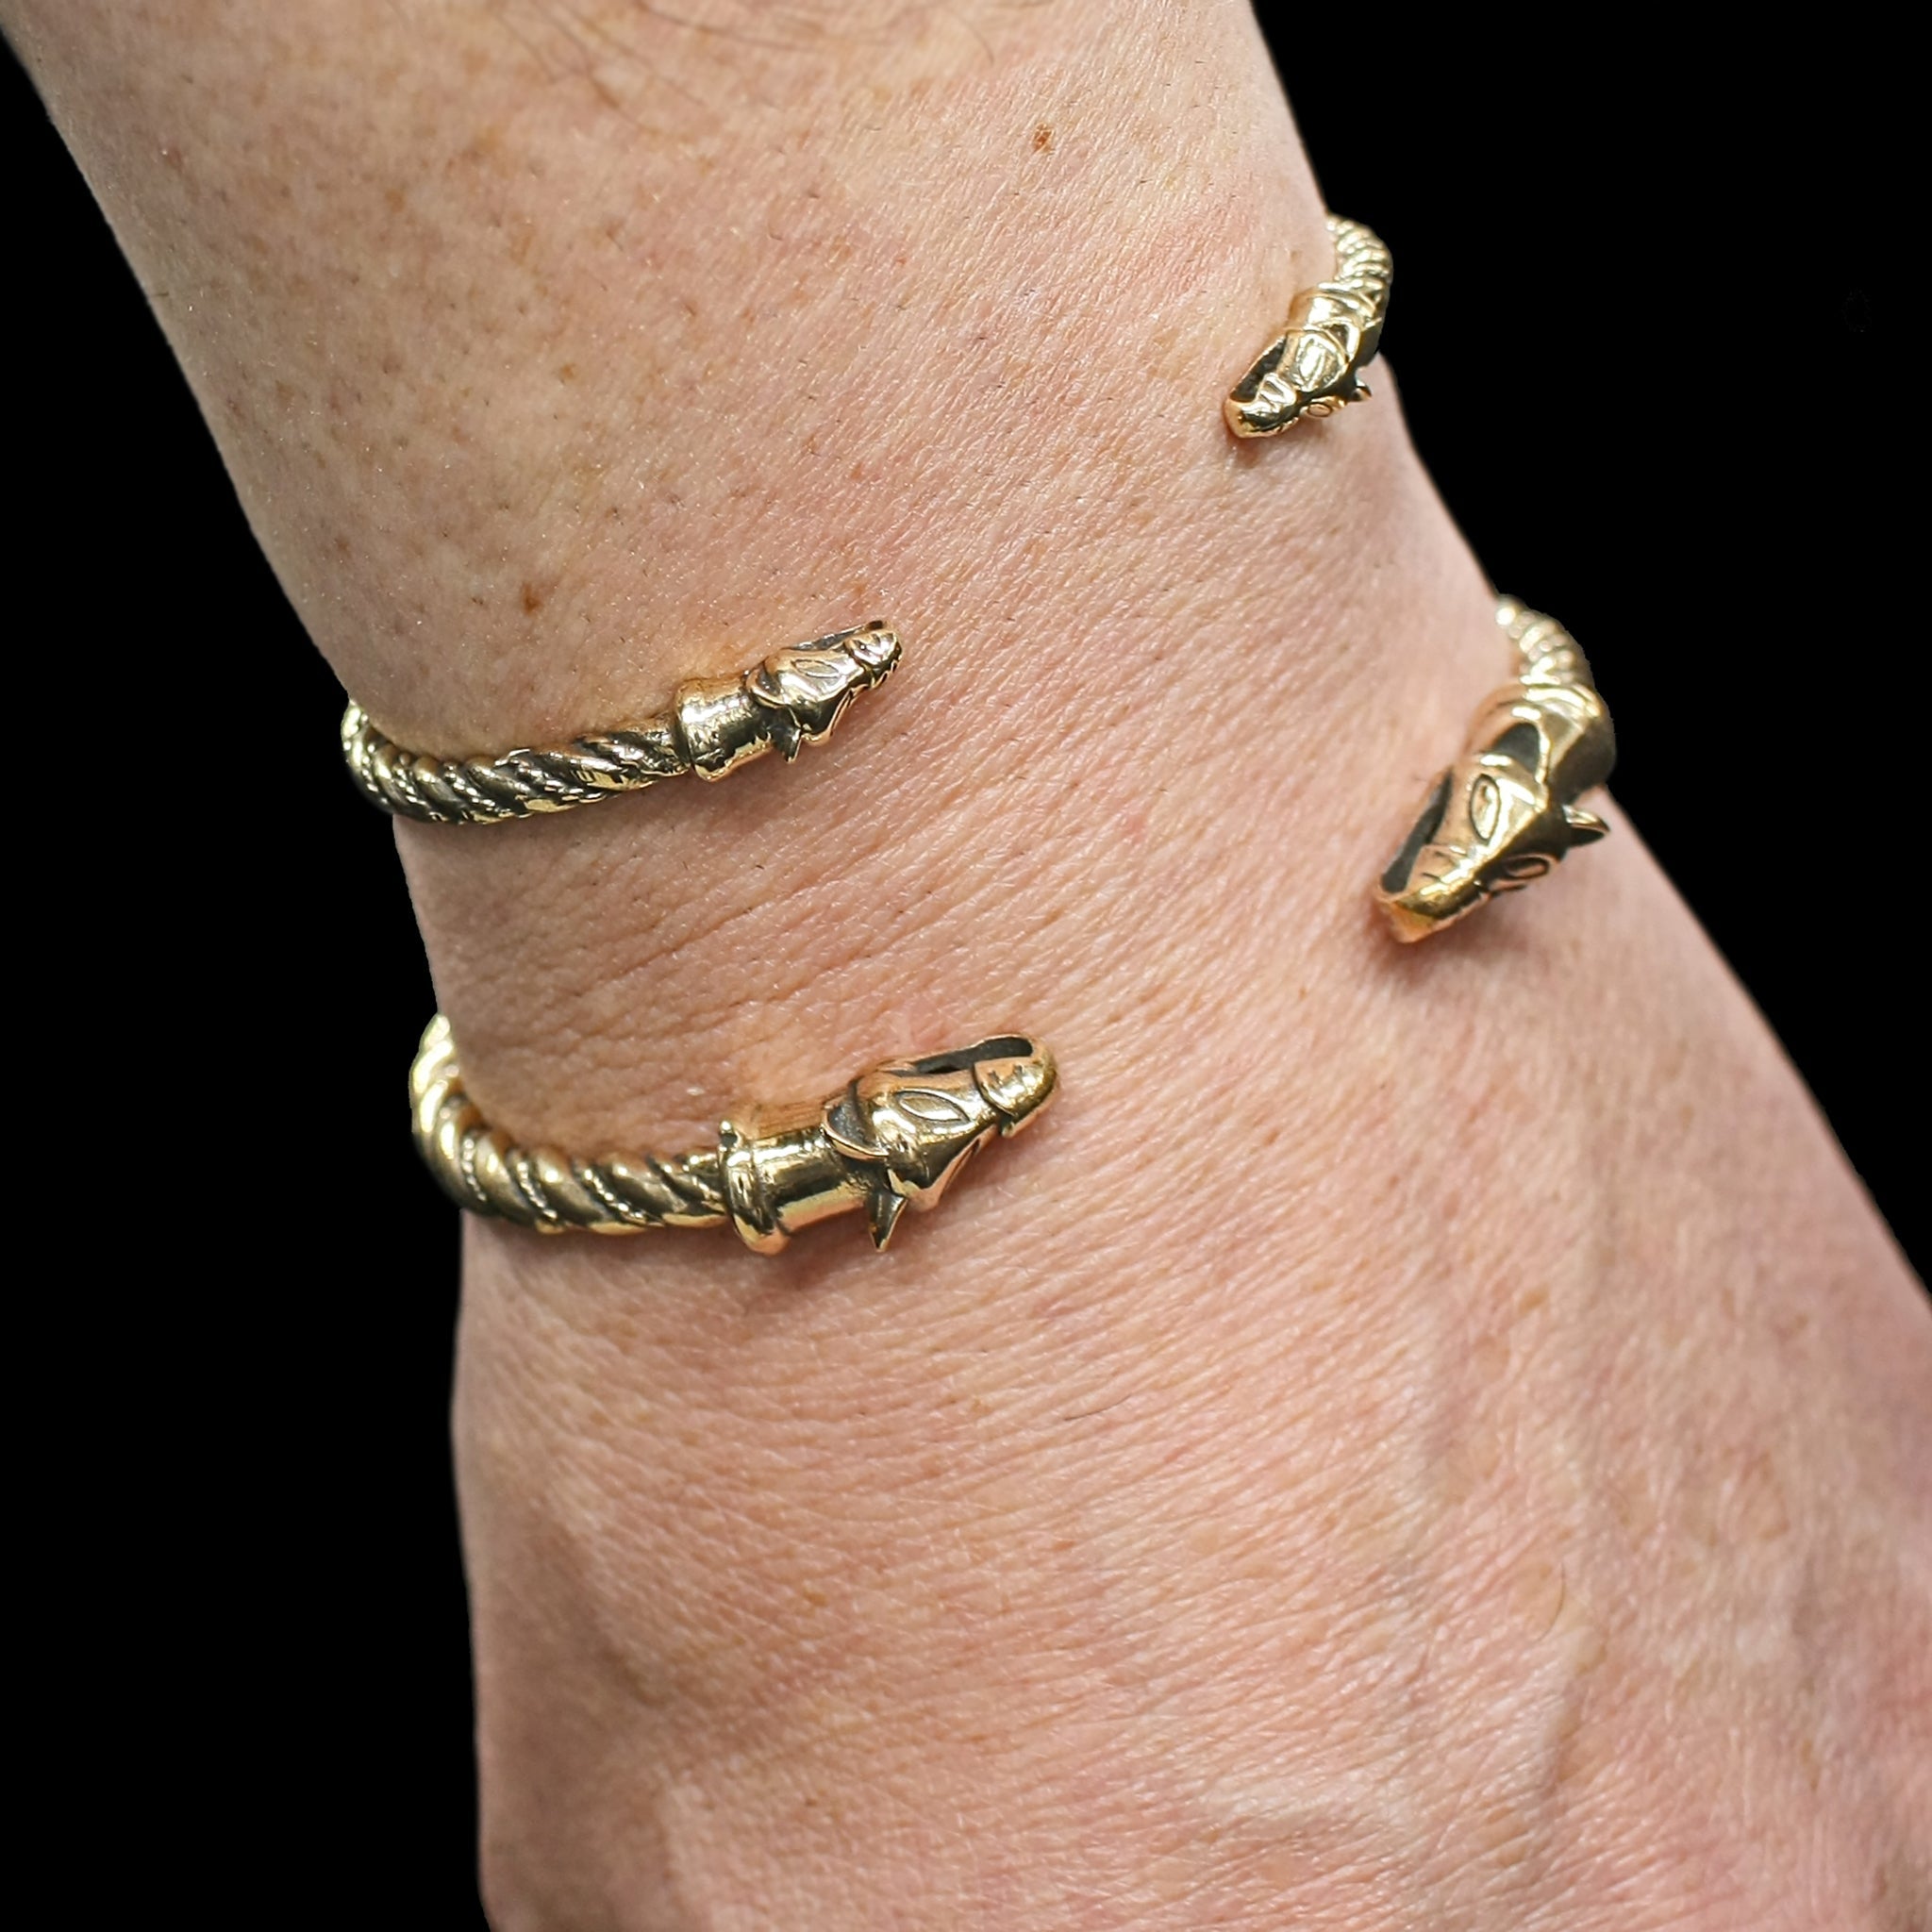 Twisted Bronze Bracelet With Icelandic Wolf Heads on Wrist